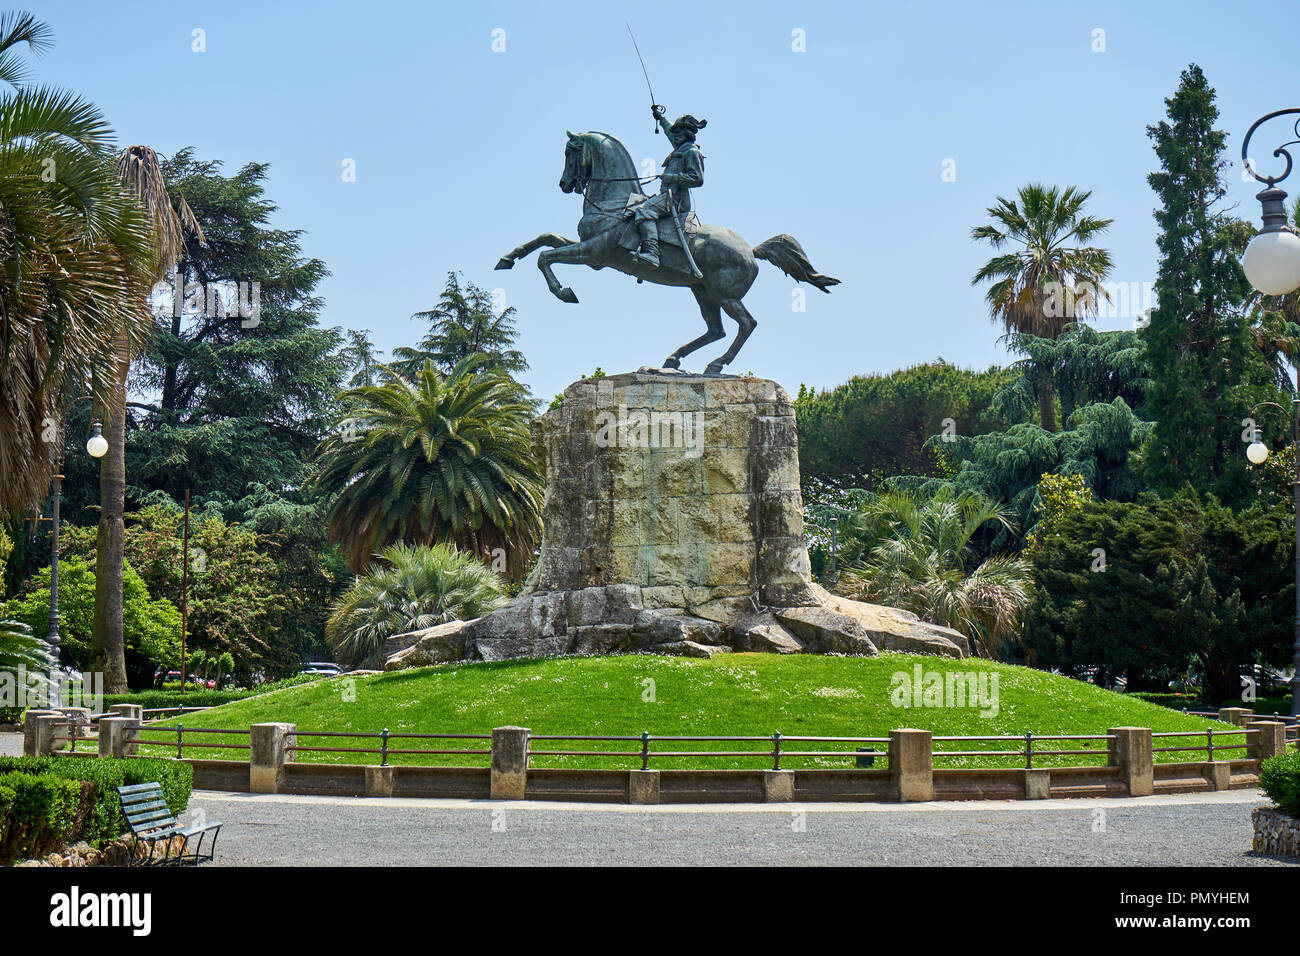 Pisa / Tuscany / Italy / May 2018 : Statue of Giuseppe Garibaldi in La Spezia, Italy. Giuseppe Garibaldi was an Italian general and politician who pla Stock Photo